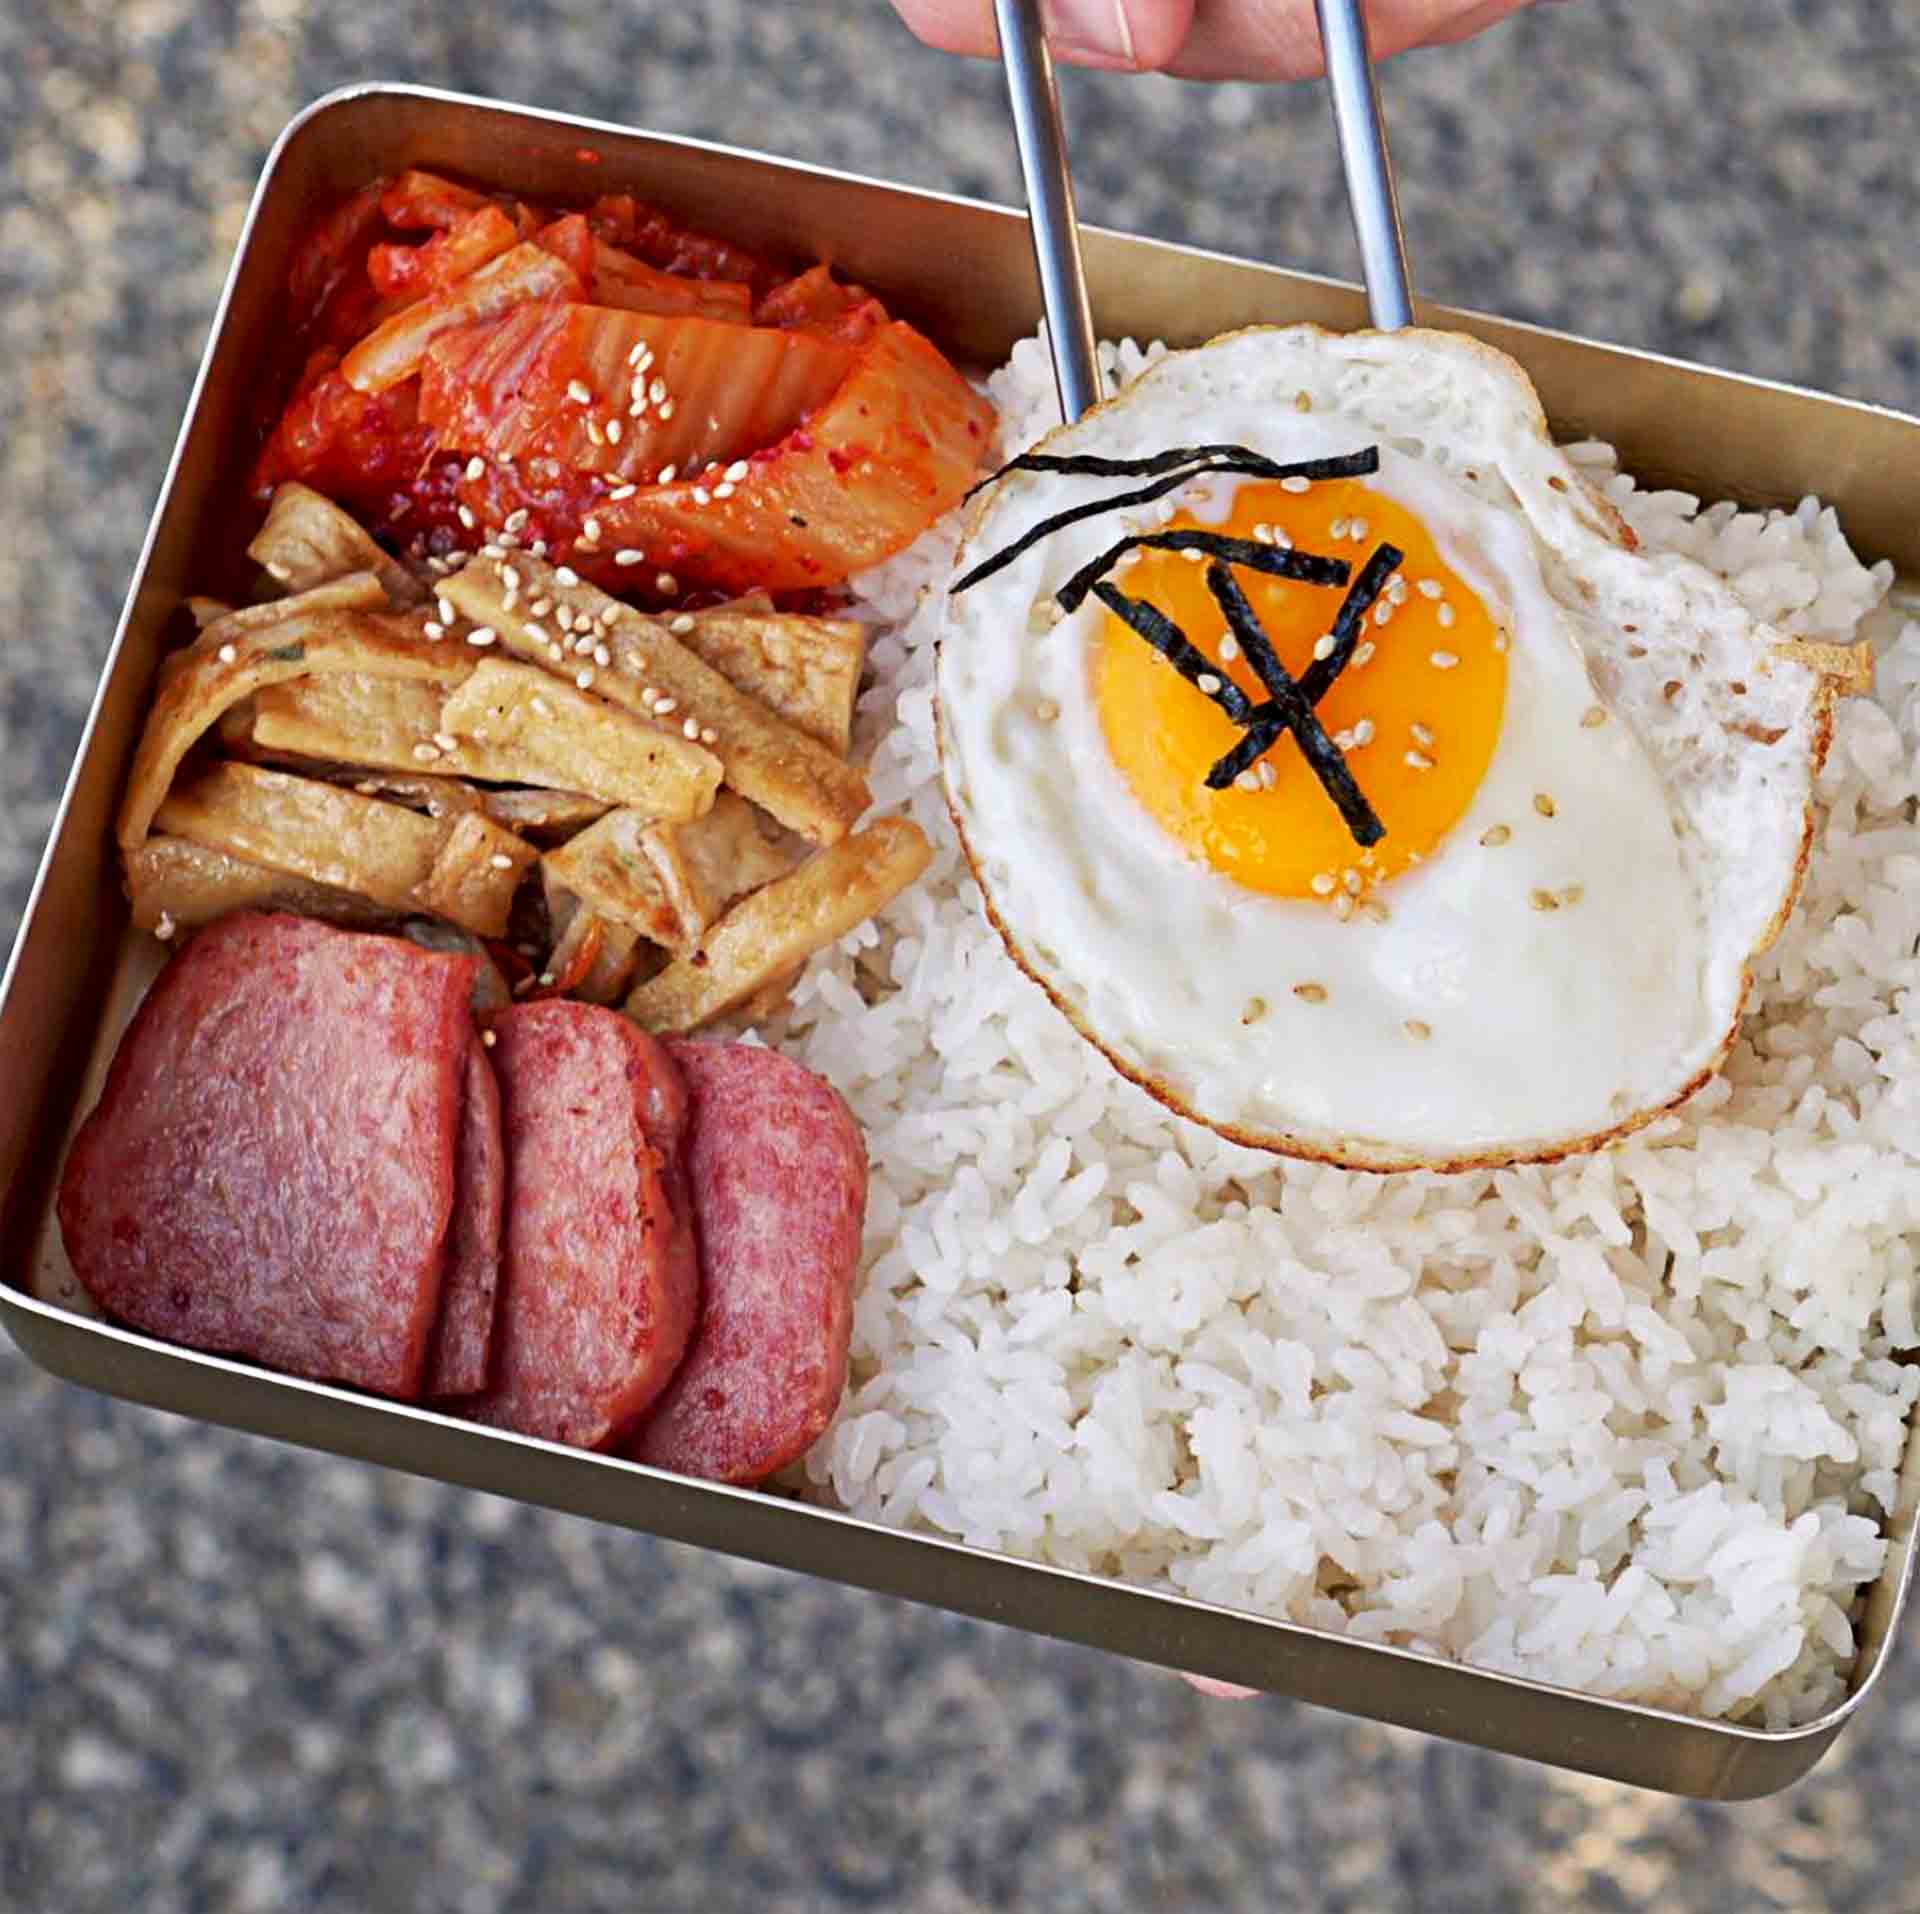 https://tryhiddengems.com/wp-content/uploads/2019/03/Korean-Lunchbox.jpg